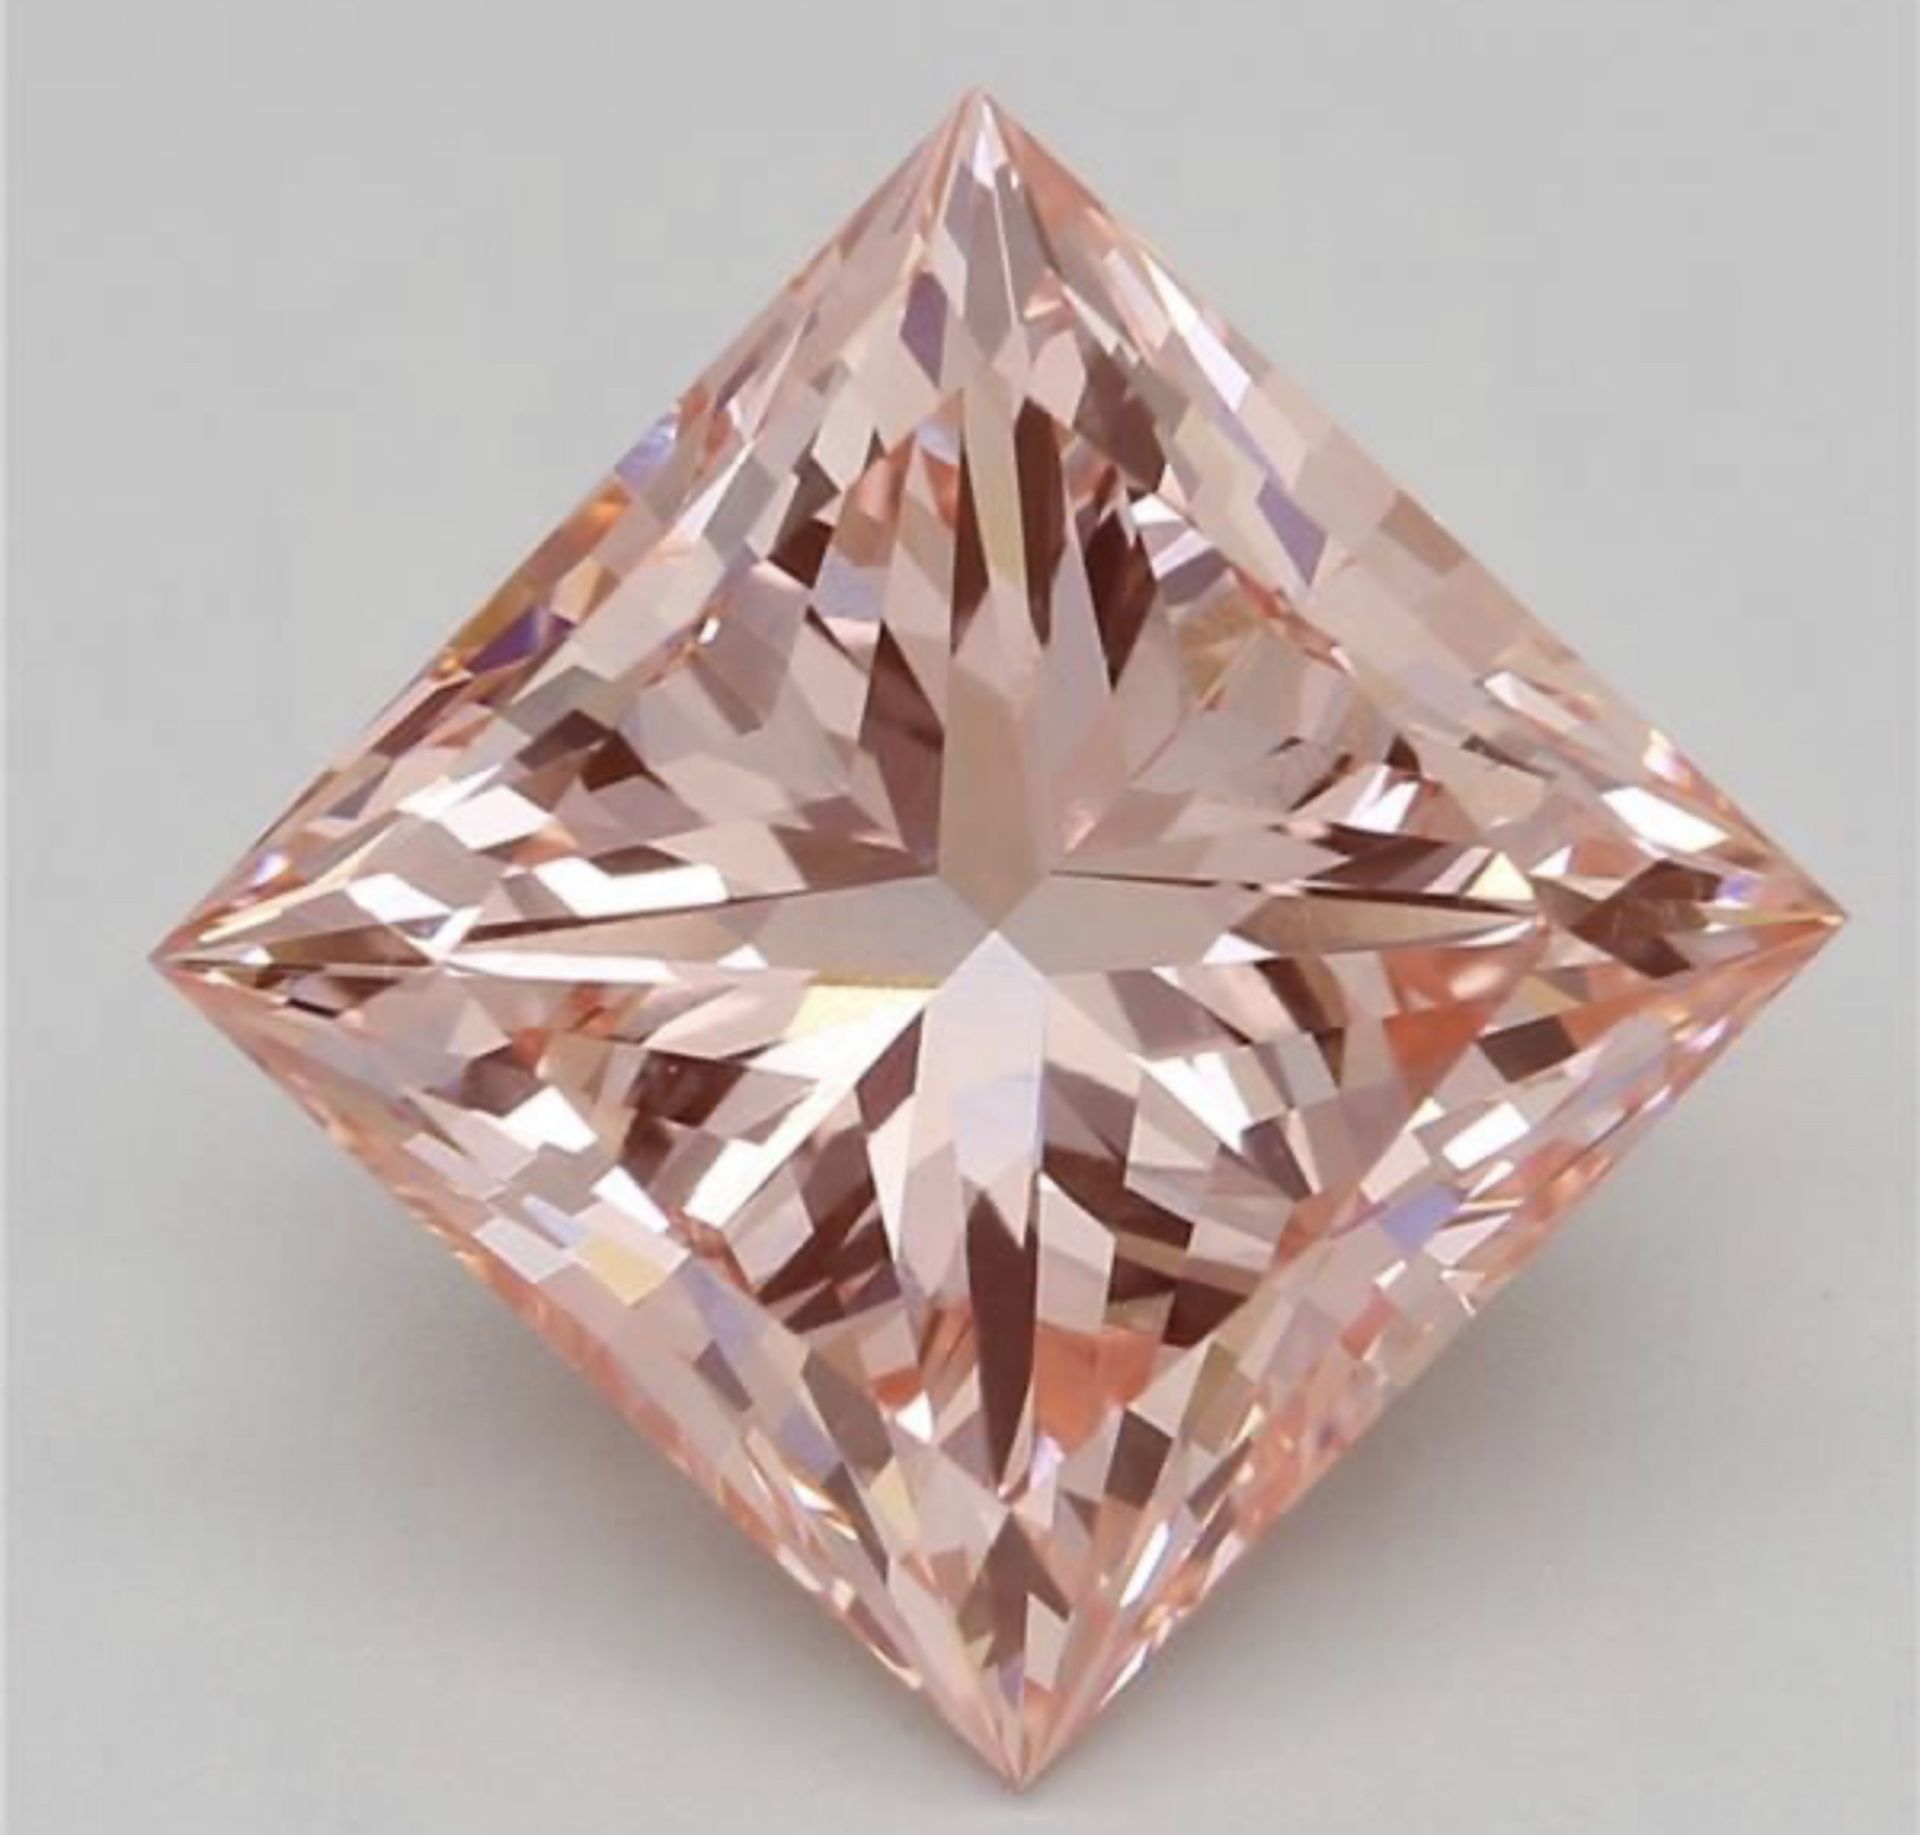 ** ON SALE ** Princess Cut Diamond Fancy Pink Colour VVS2 Clarity 3.02 Carat EX EX - LG593370815 - Image 6 of 8